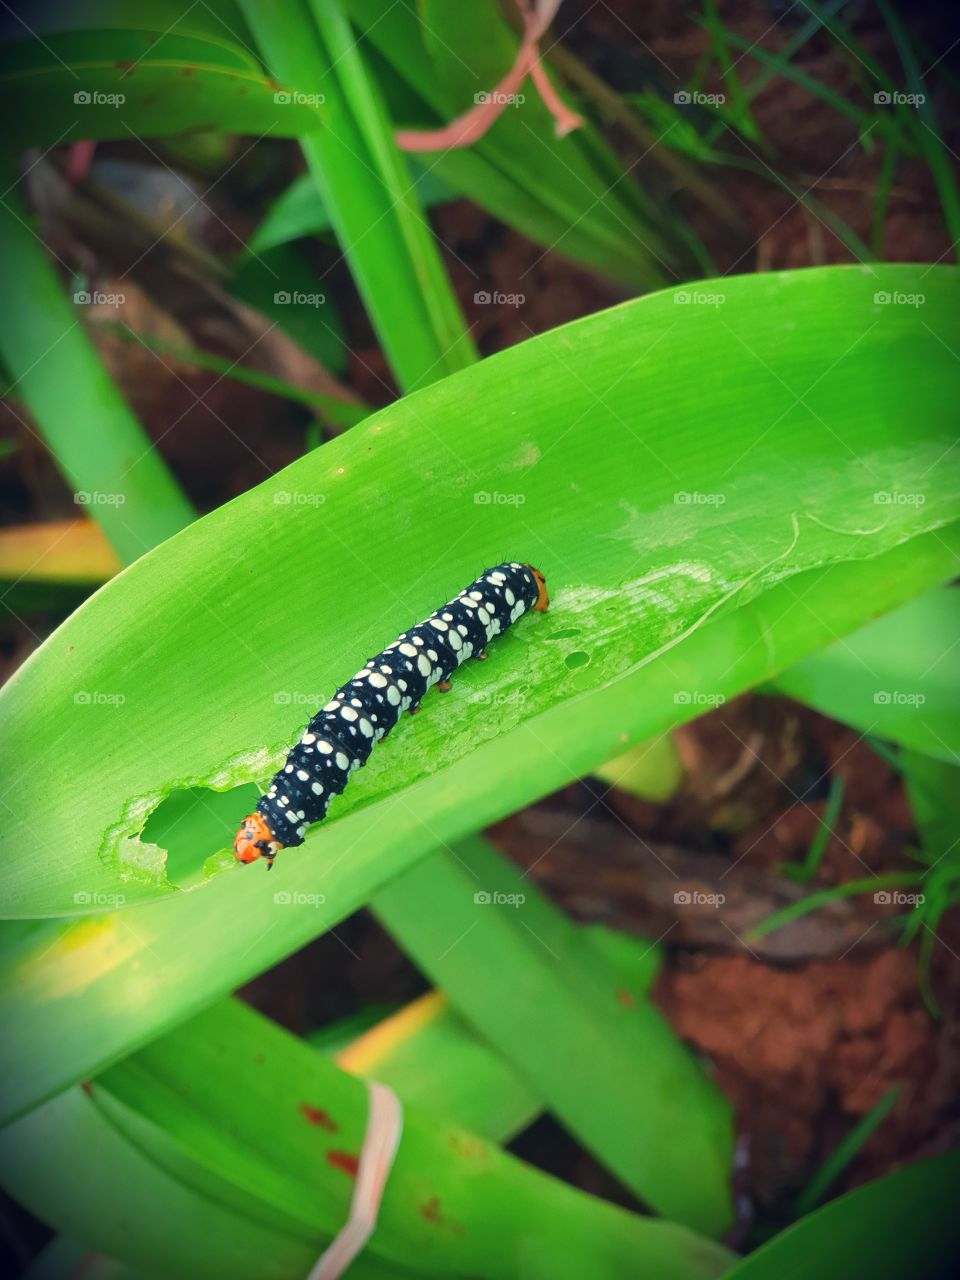 Caterpillar pest